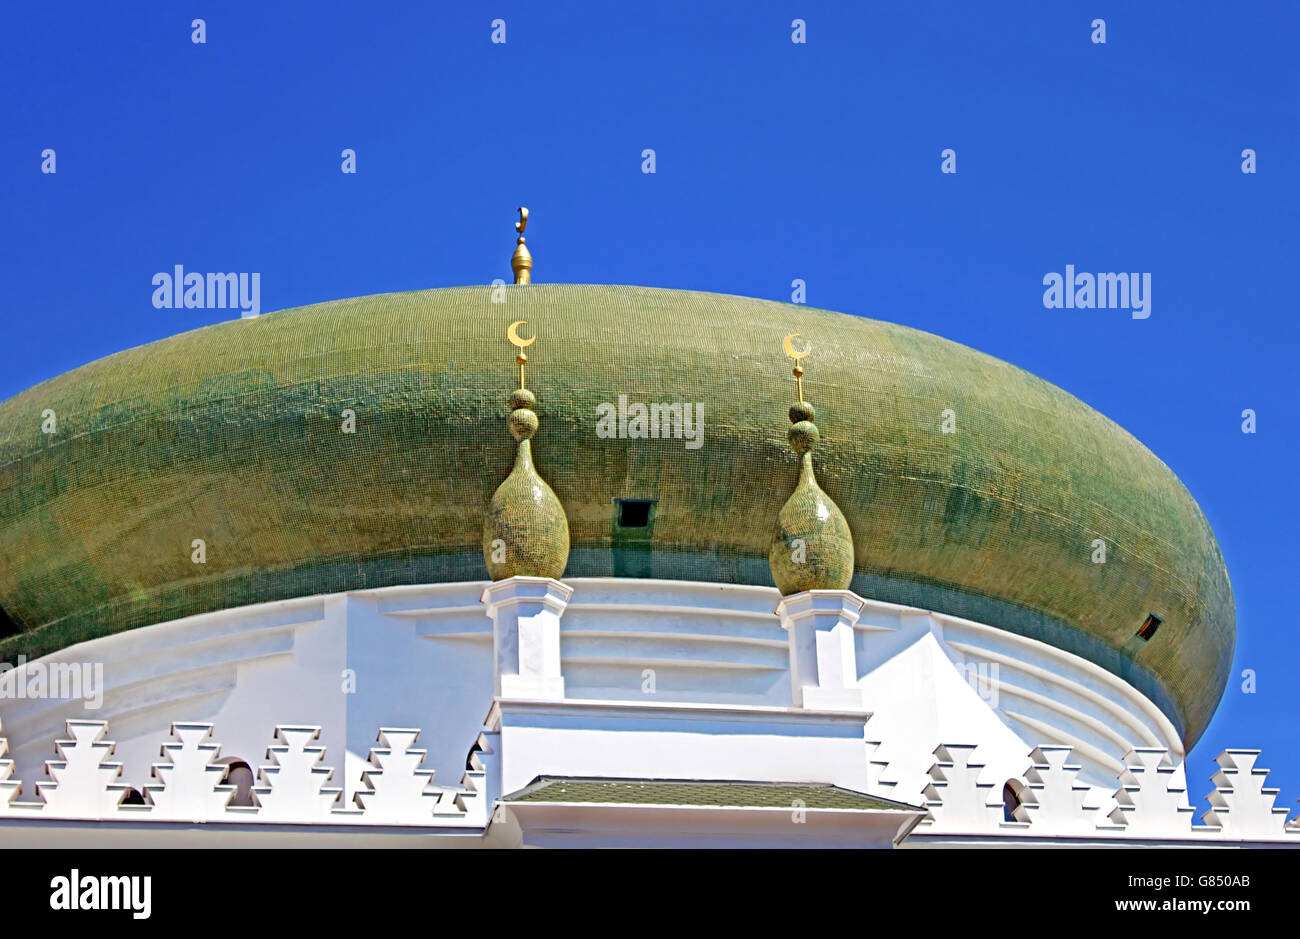 Dome of the Al-Salam Mosque and Arabian Cultural Center are located in Odessa, Ukraine Stock Photo